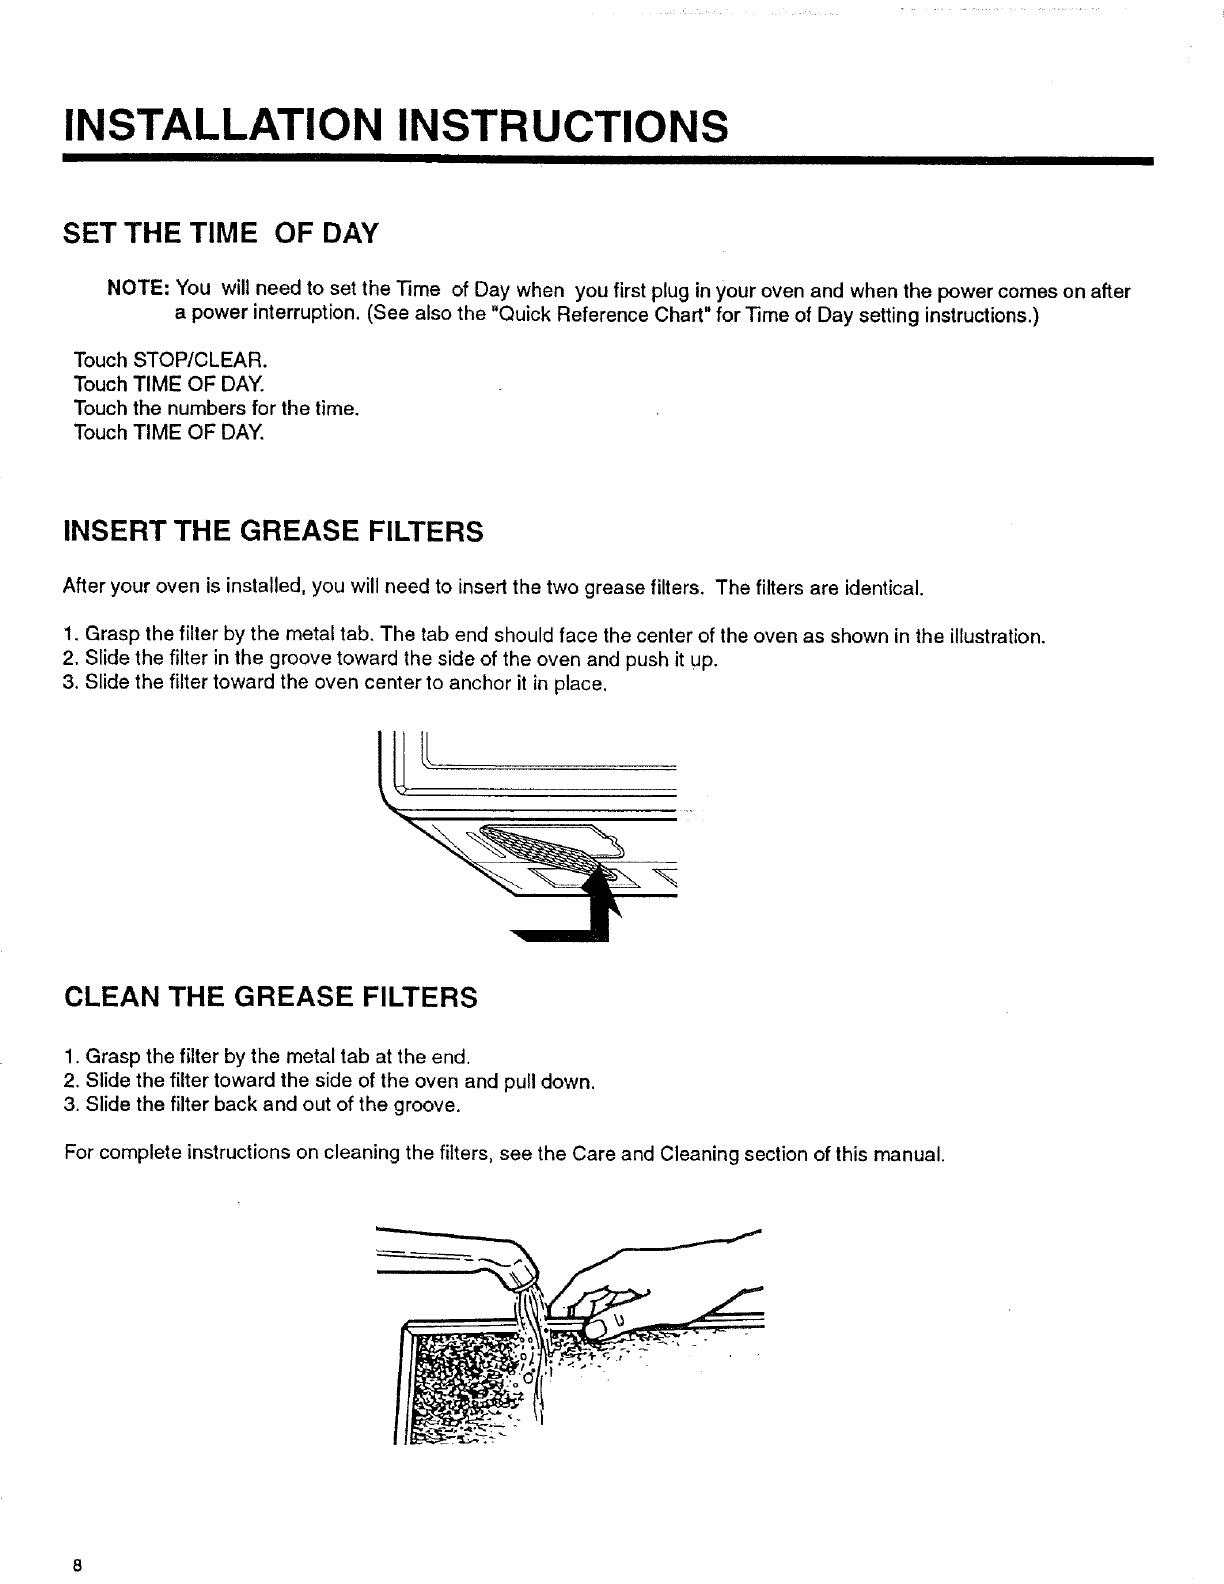 Kenmore 721.66339 Microwave Owner's Manual